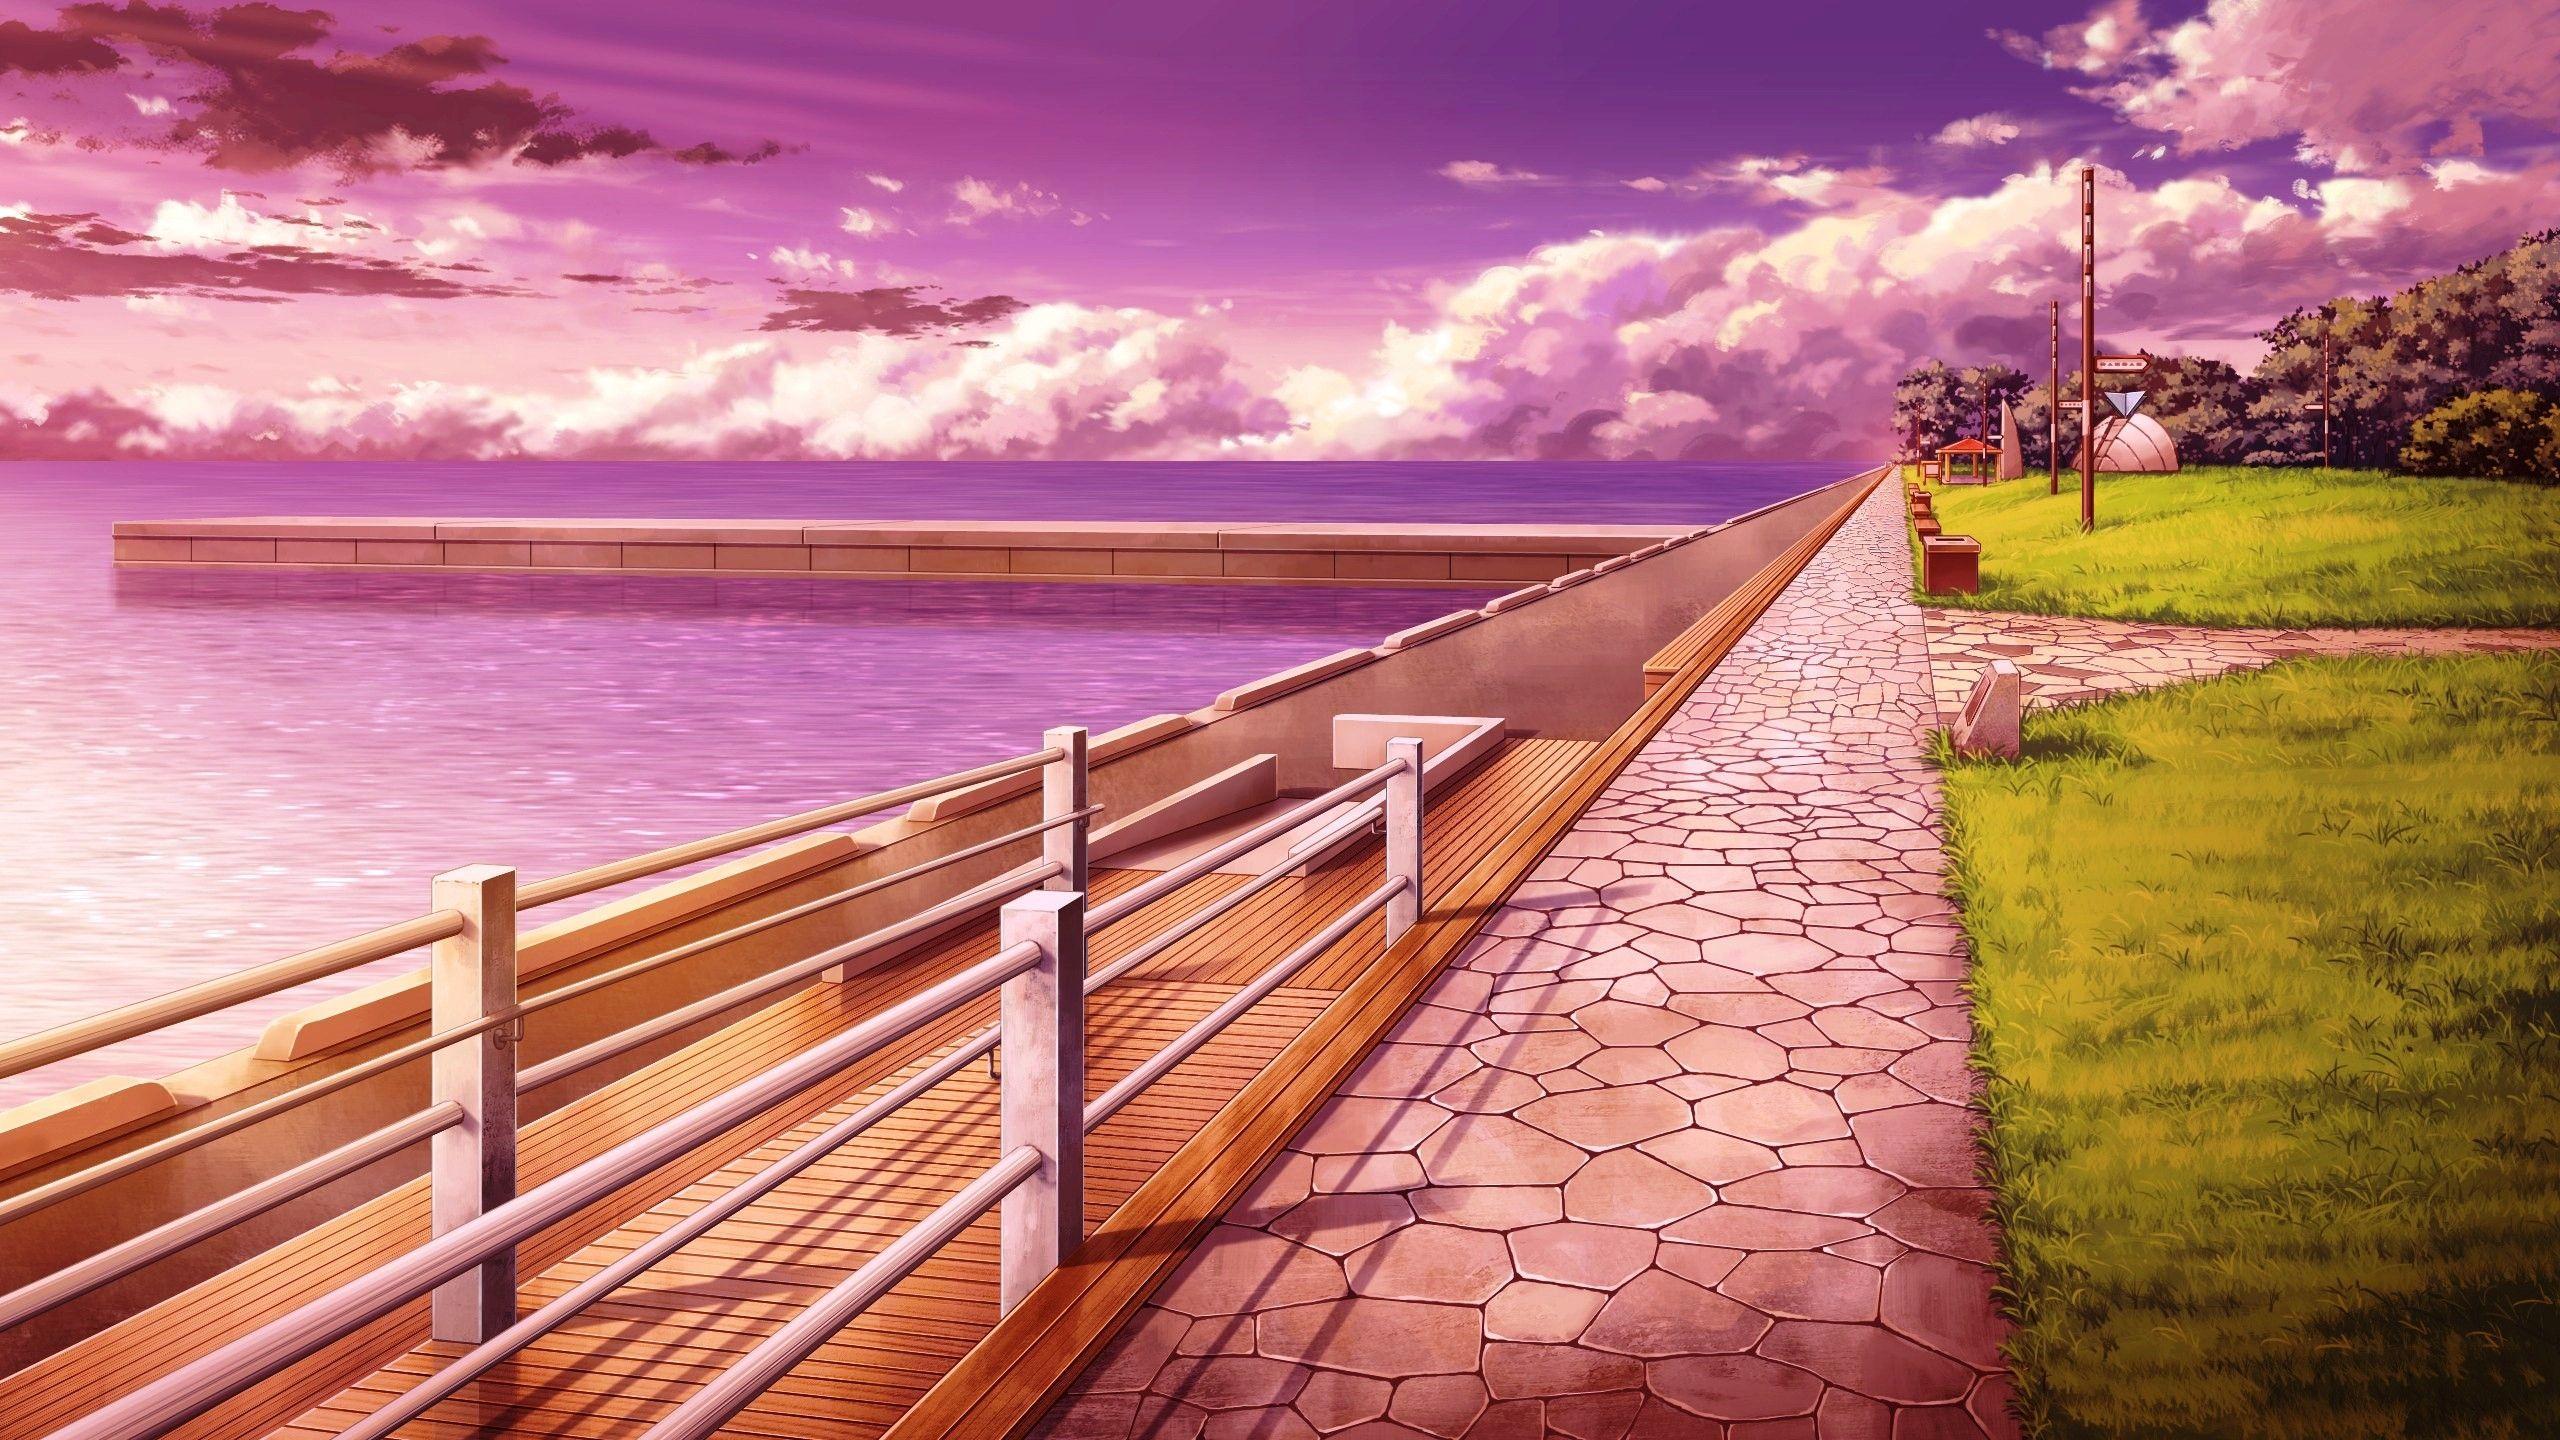 Anime Backgrounds Scenery